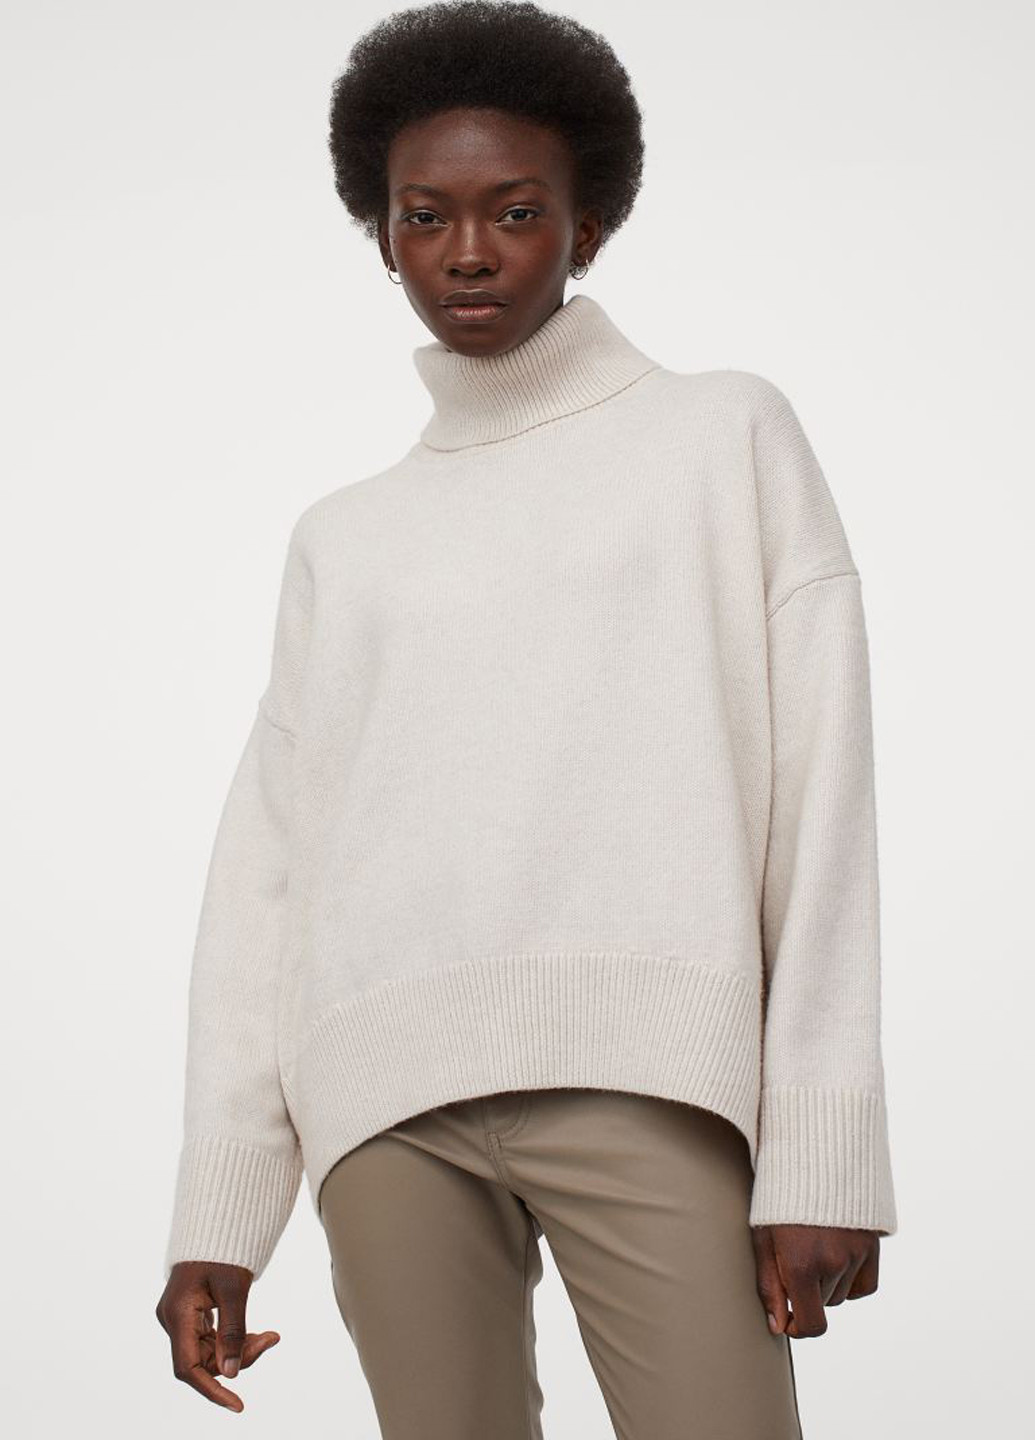 Бежевый демисезонный свитер H&M